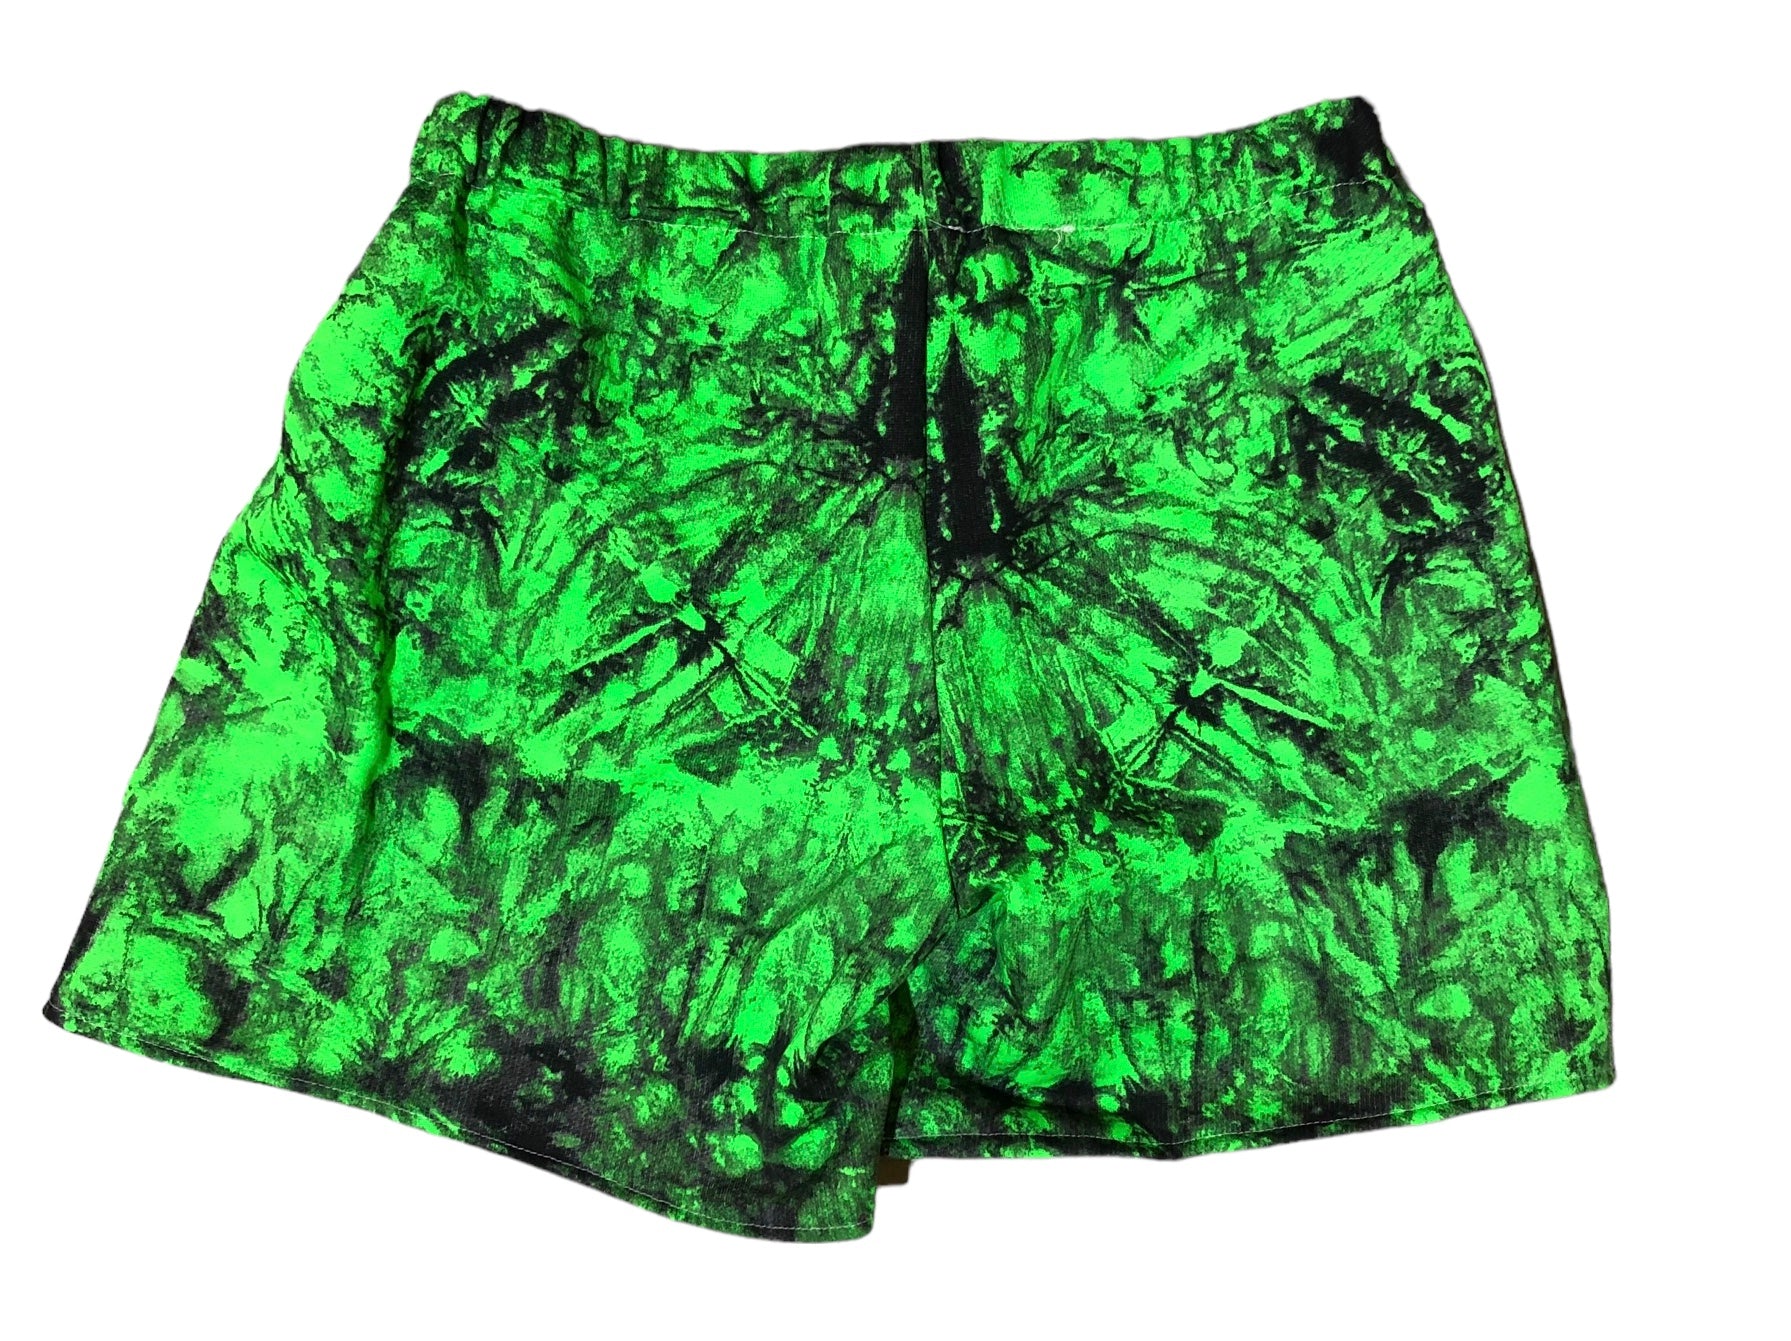 Custom Black and Neon Green Shorts by Blim